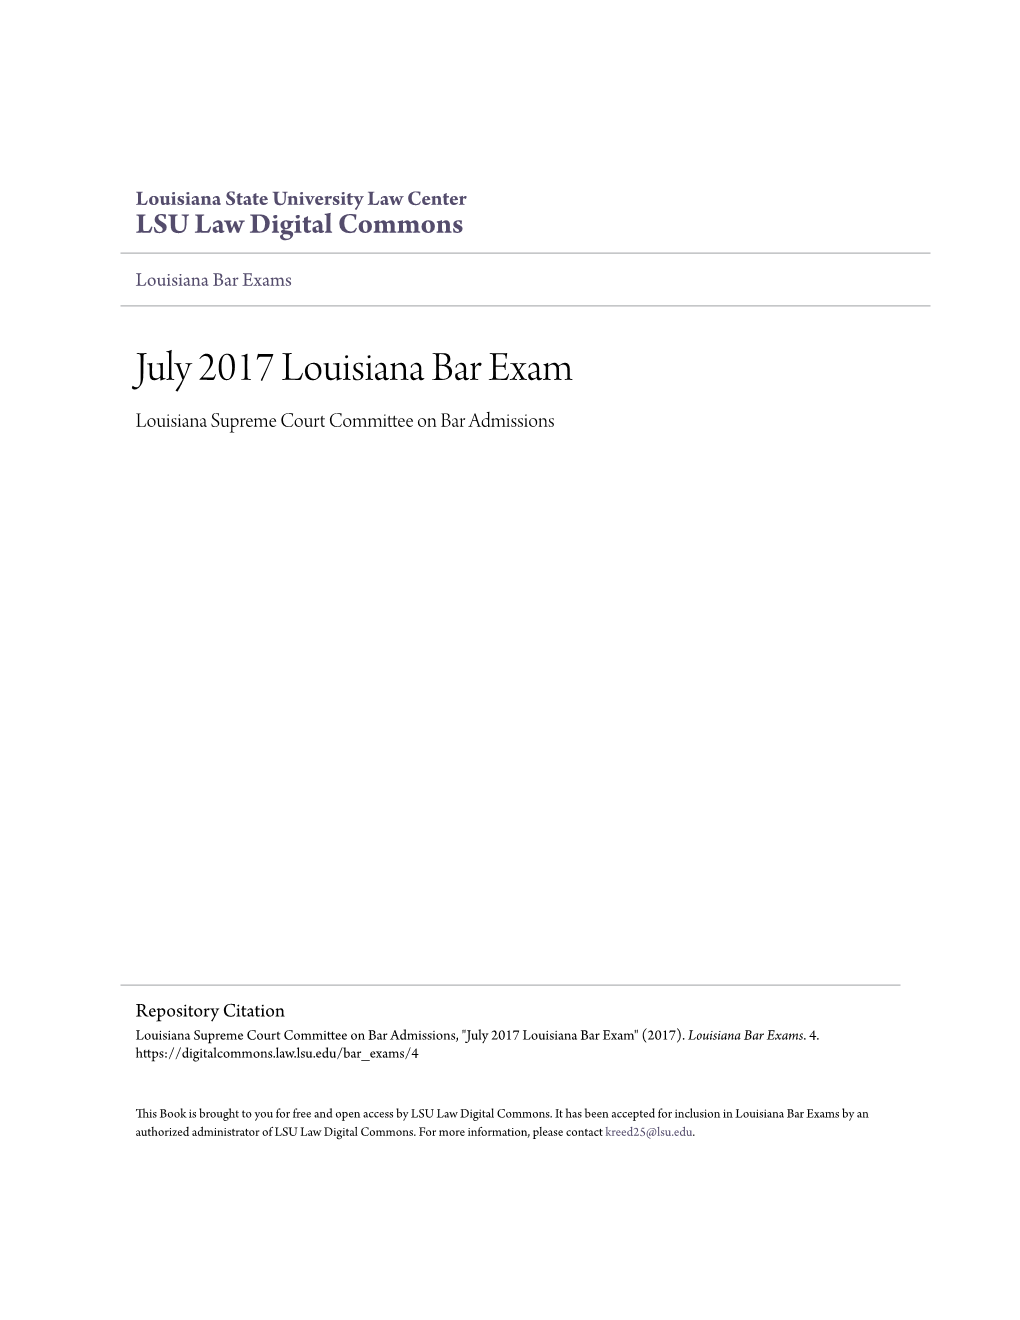 July 2017 Louisiana Bar Exam Louisiana Supreme Court Committee on Bar Admissions